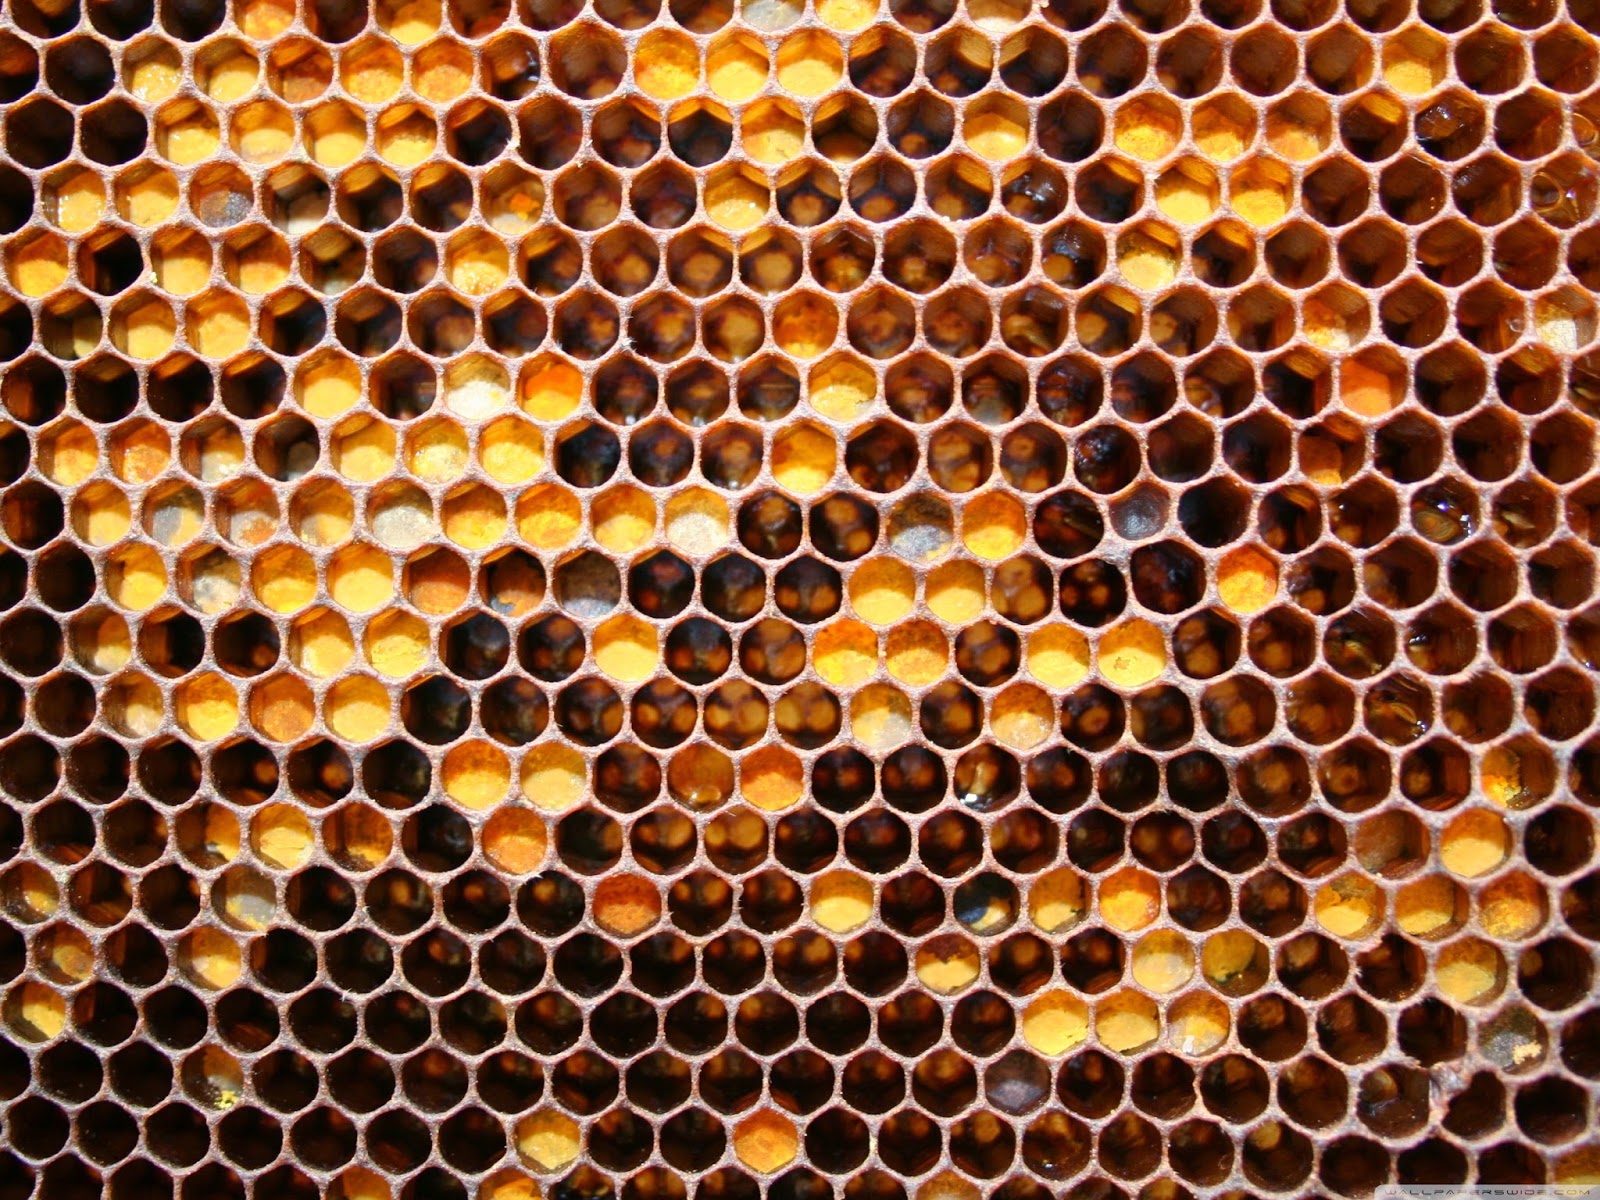 Honey Bees Honeycomb